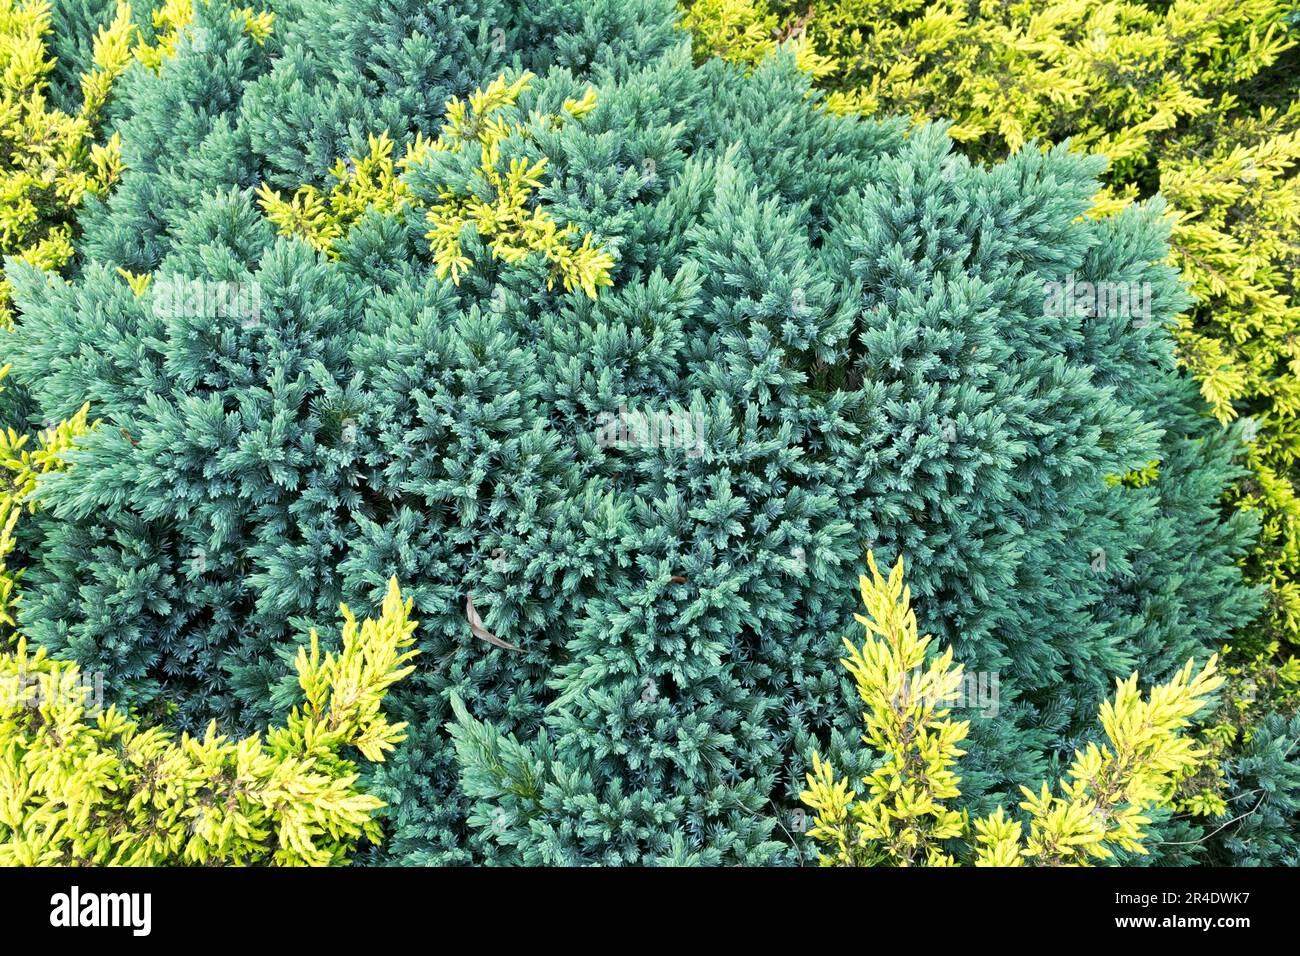 Couverture de terre, Juniper instable, Juniper rampant, Gymnosperm, usine, Bleu jaune, Juniperus 'Goldschatz' et 'Blue Star' Banque D'Images